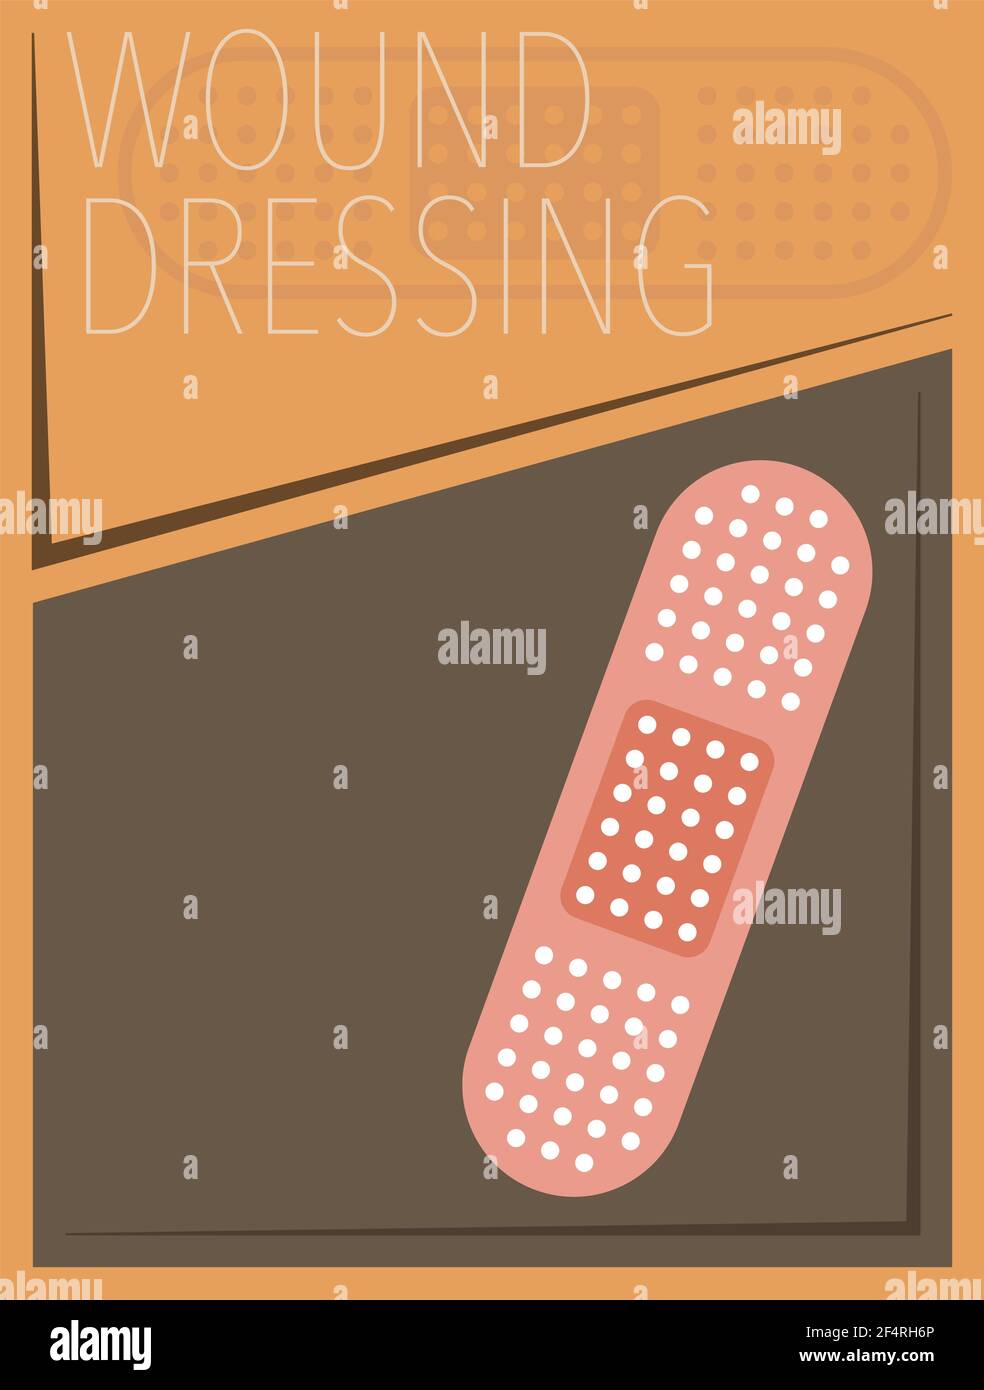 Wound Dressing Minimal Design, Adhesive Bandage Vector Art Illustration Stock Vector